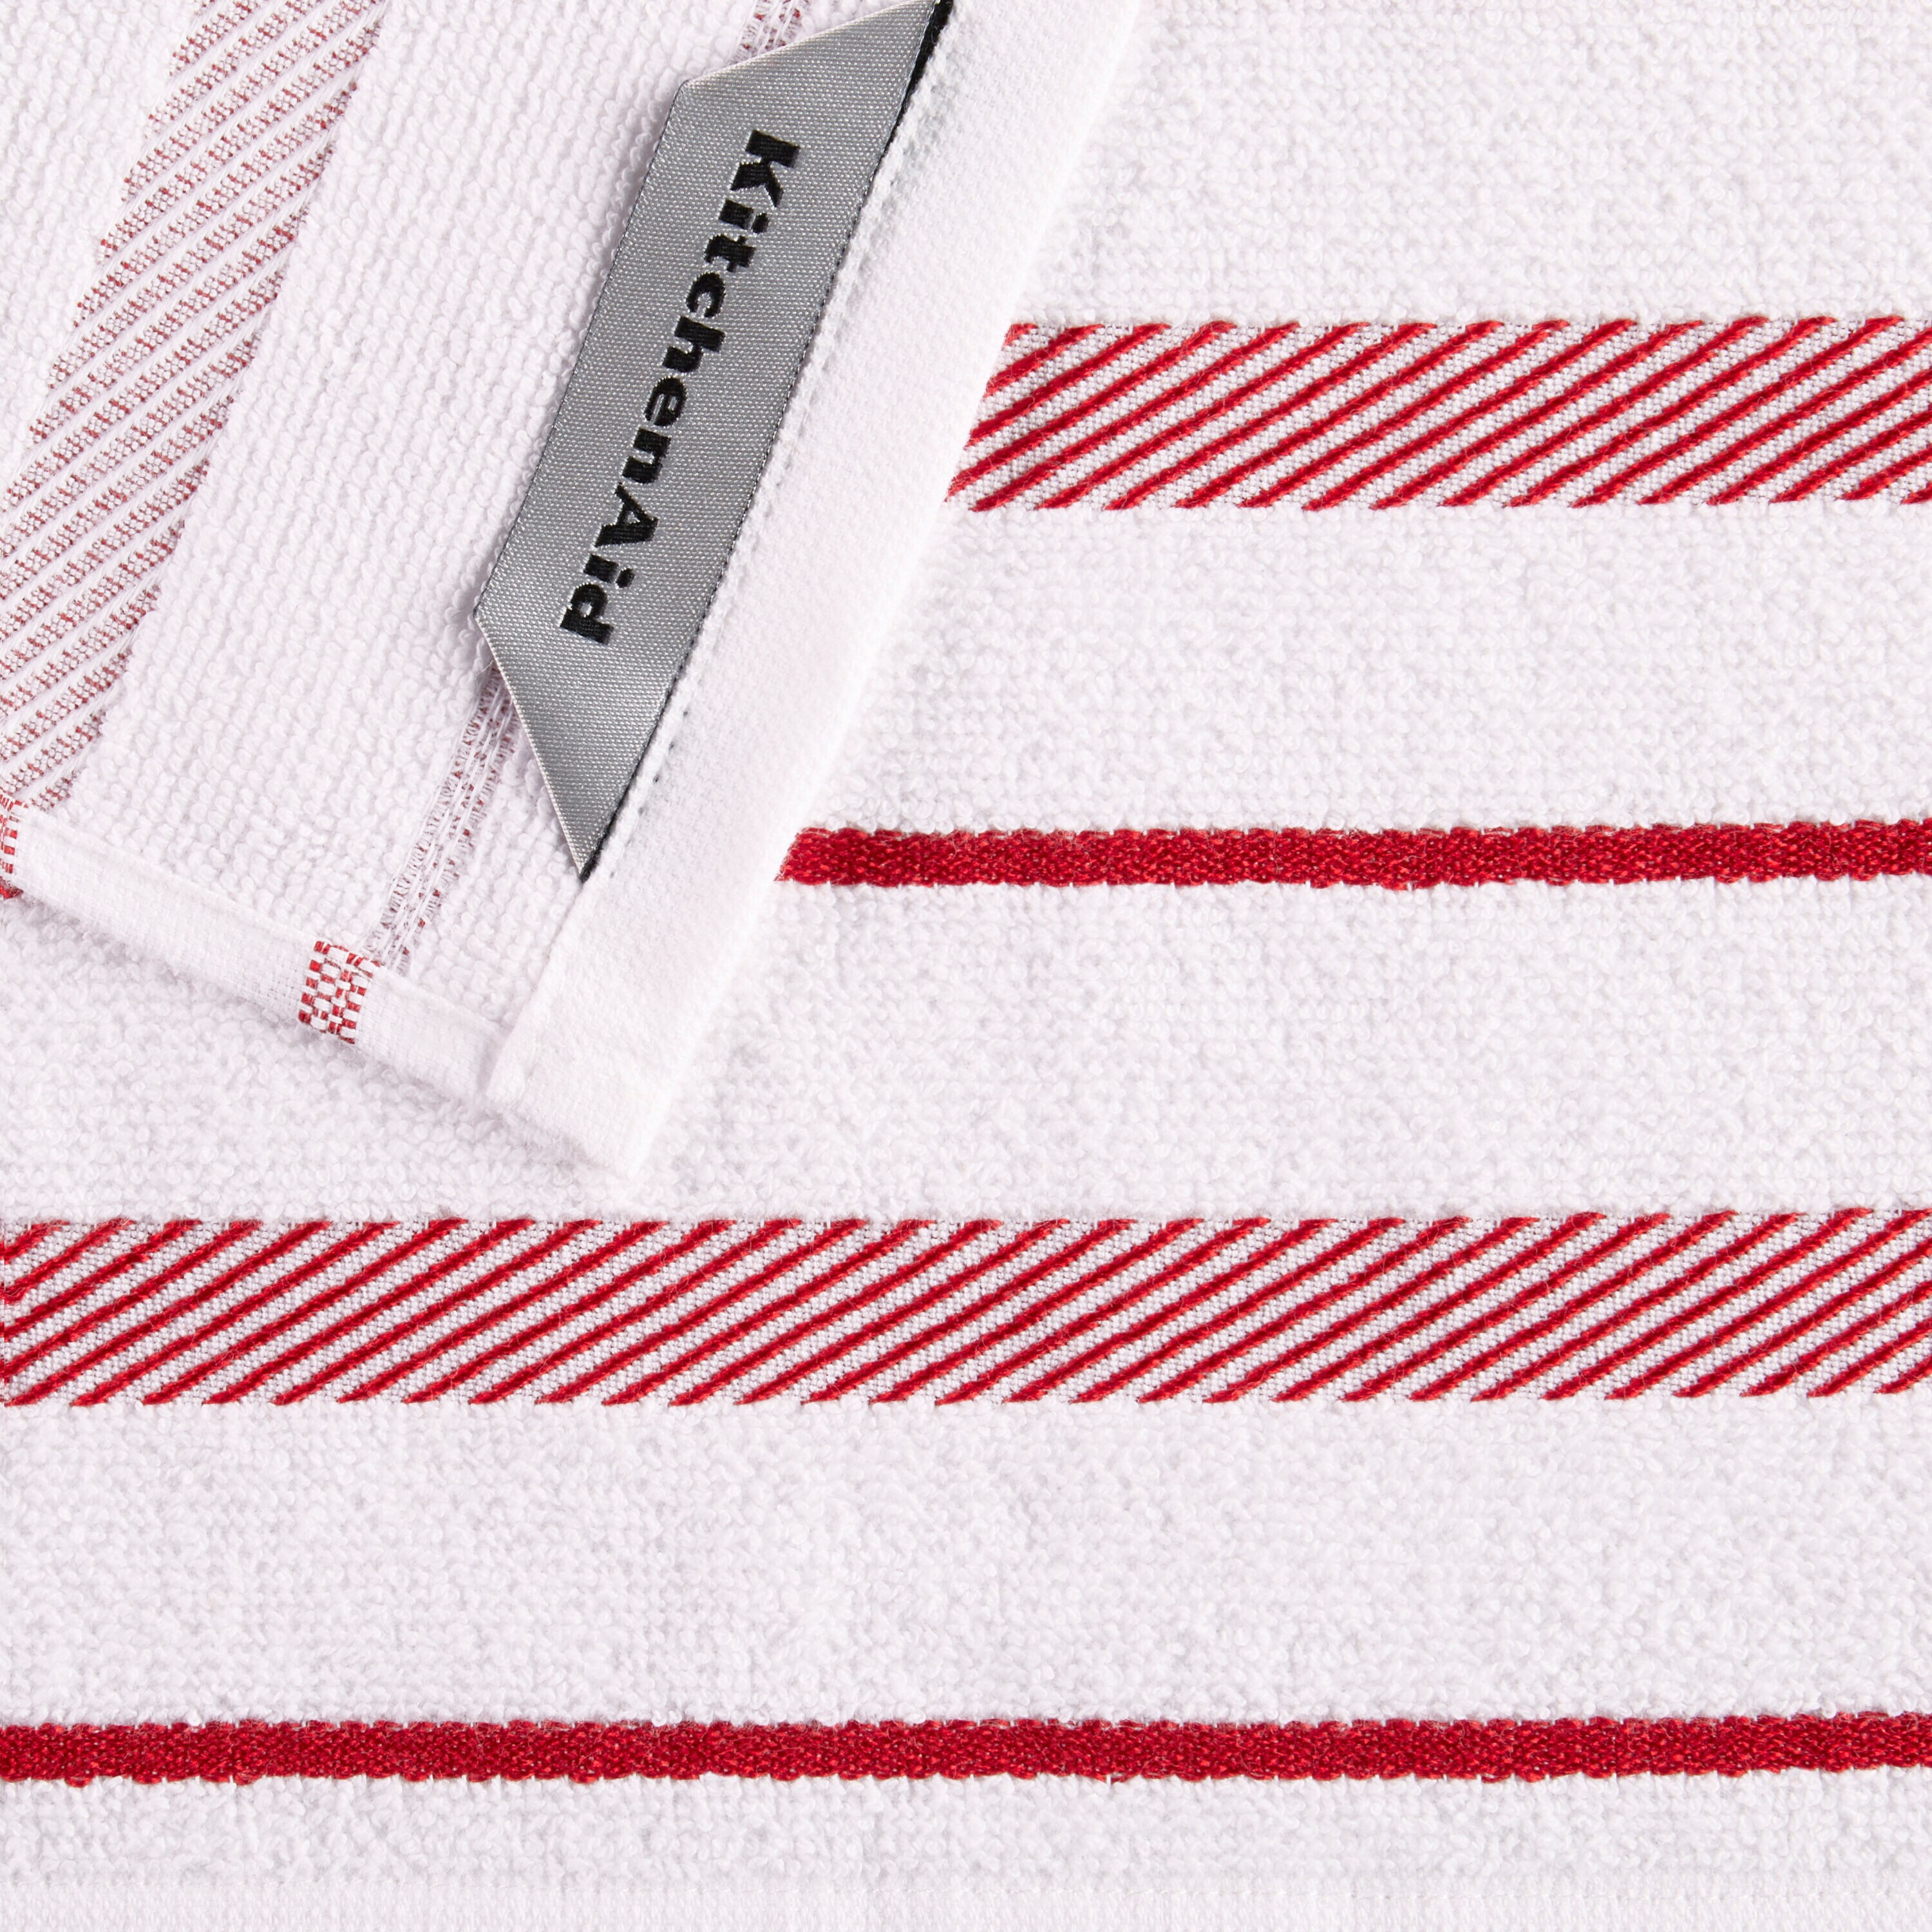 Blue KitchenAid Towels Set Of 2 White Stripes Stripes Absorbent New